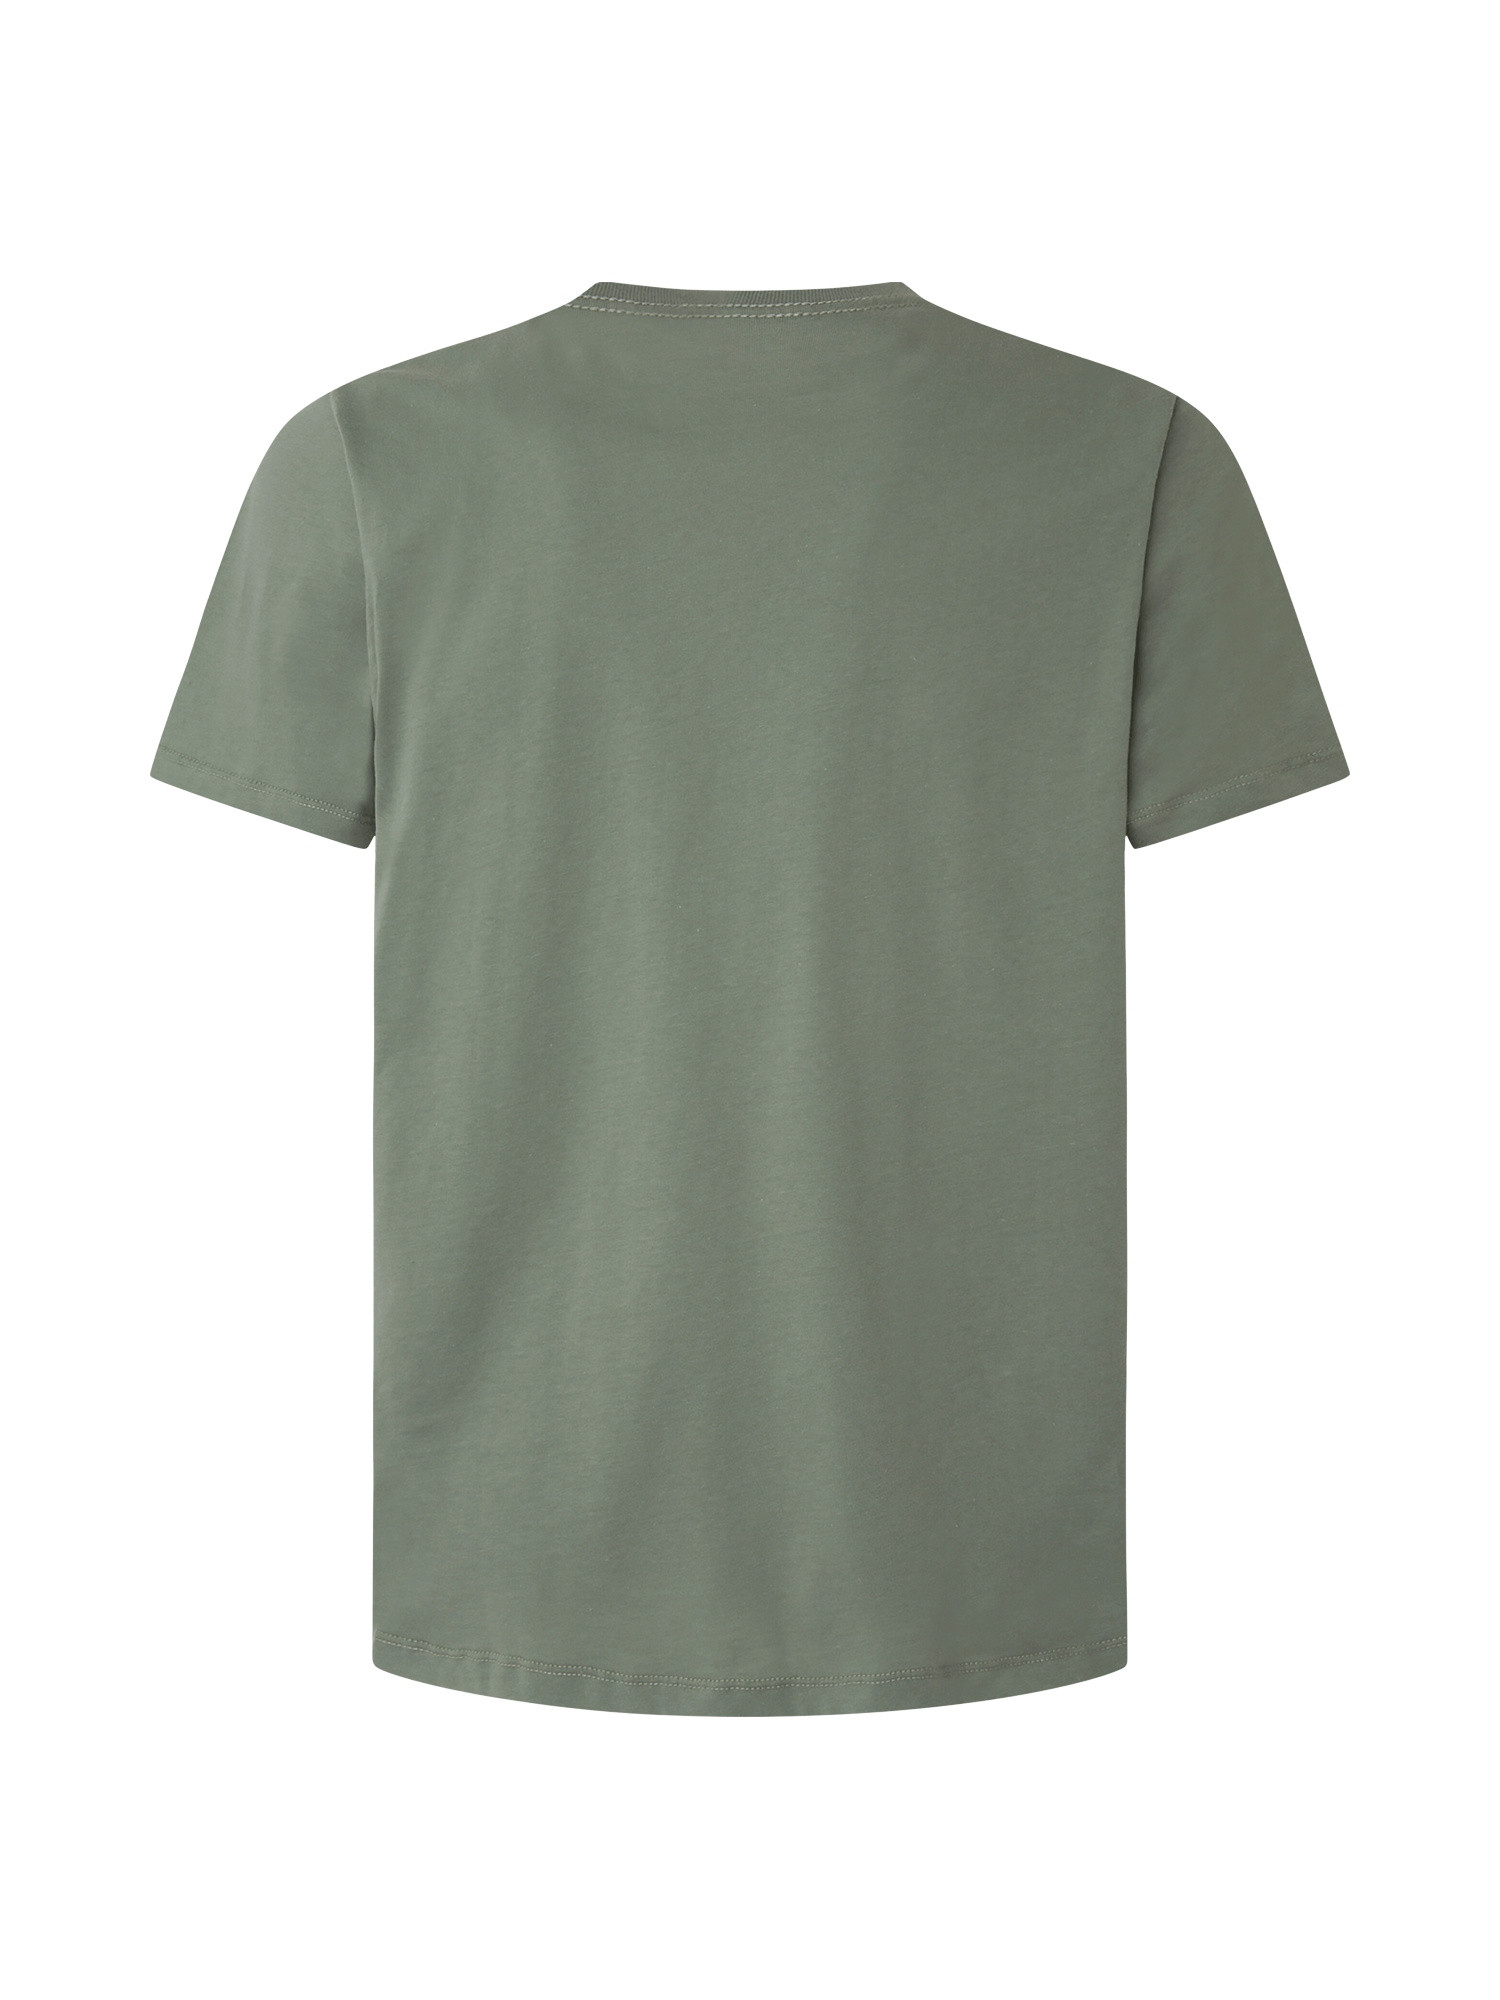 Pepe Jeans - Cotton logo T-shirt, Light Green, large image number 1